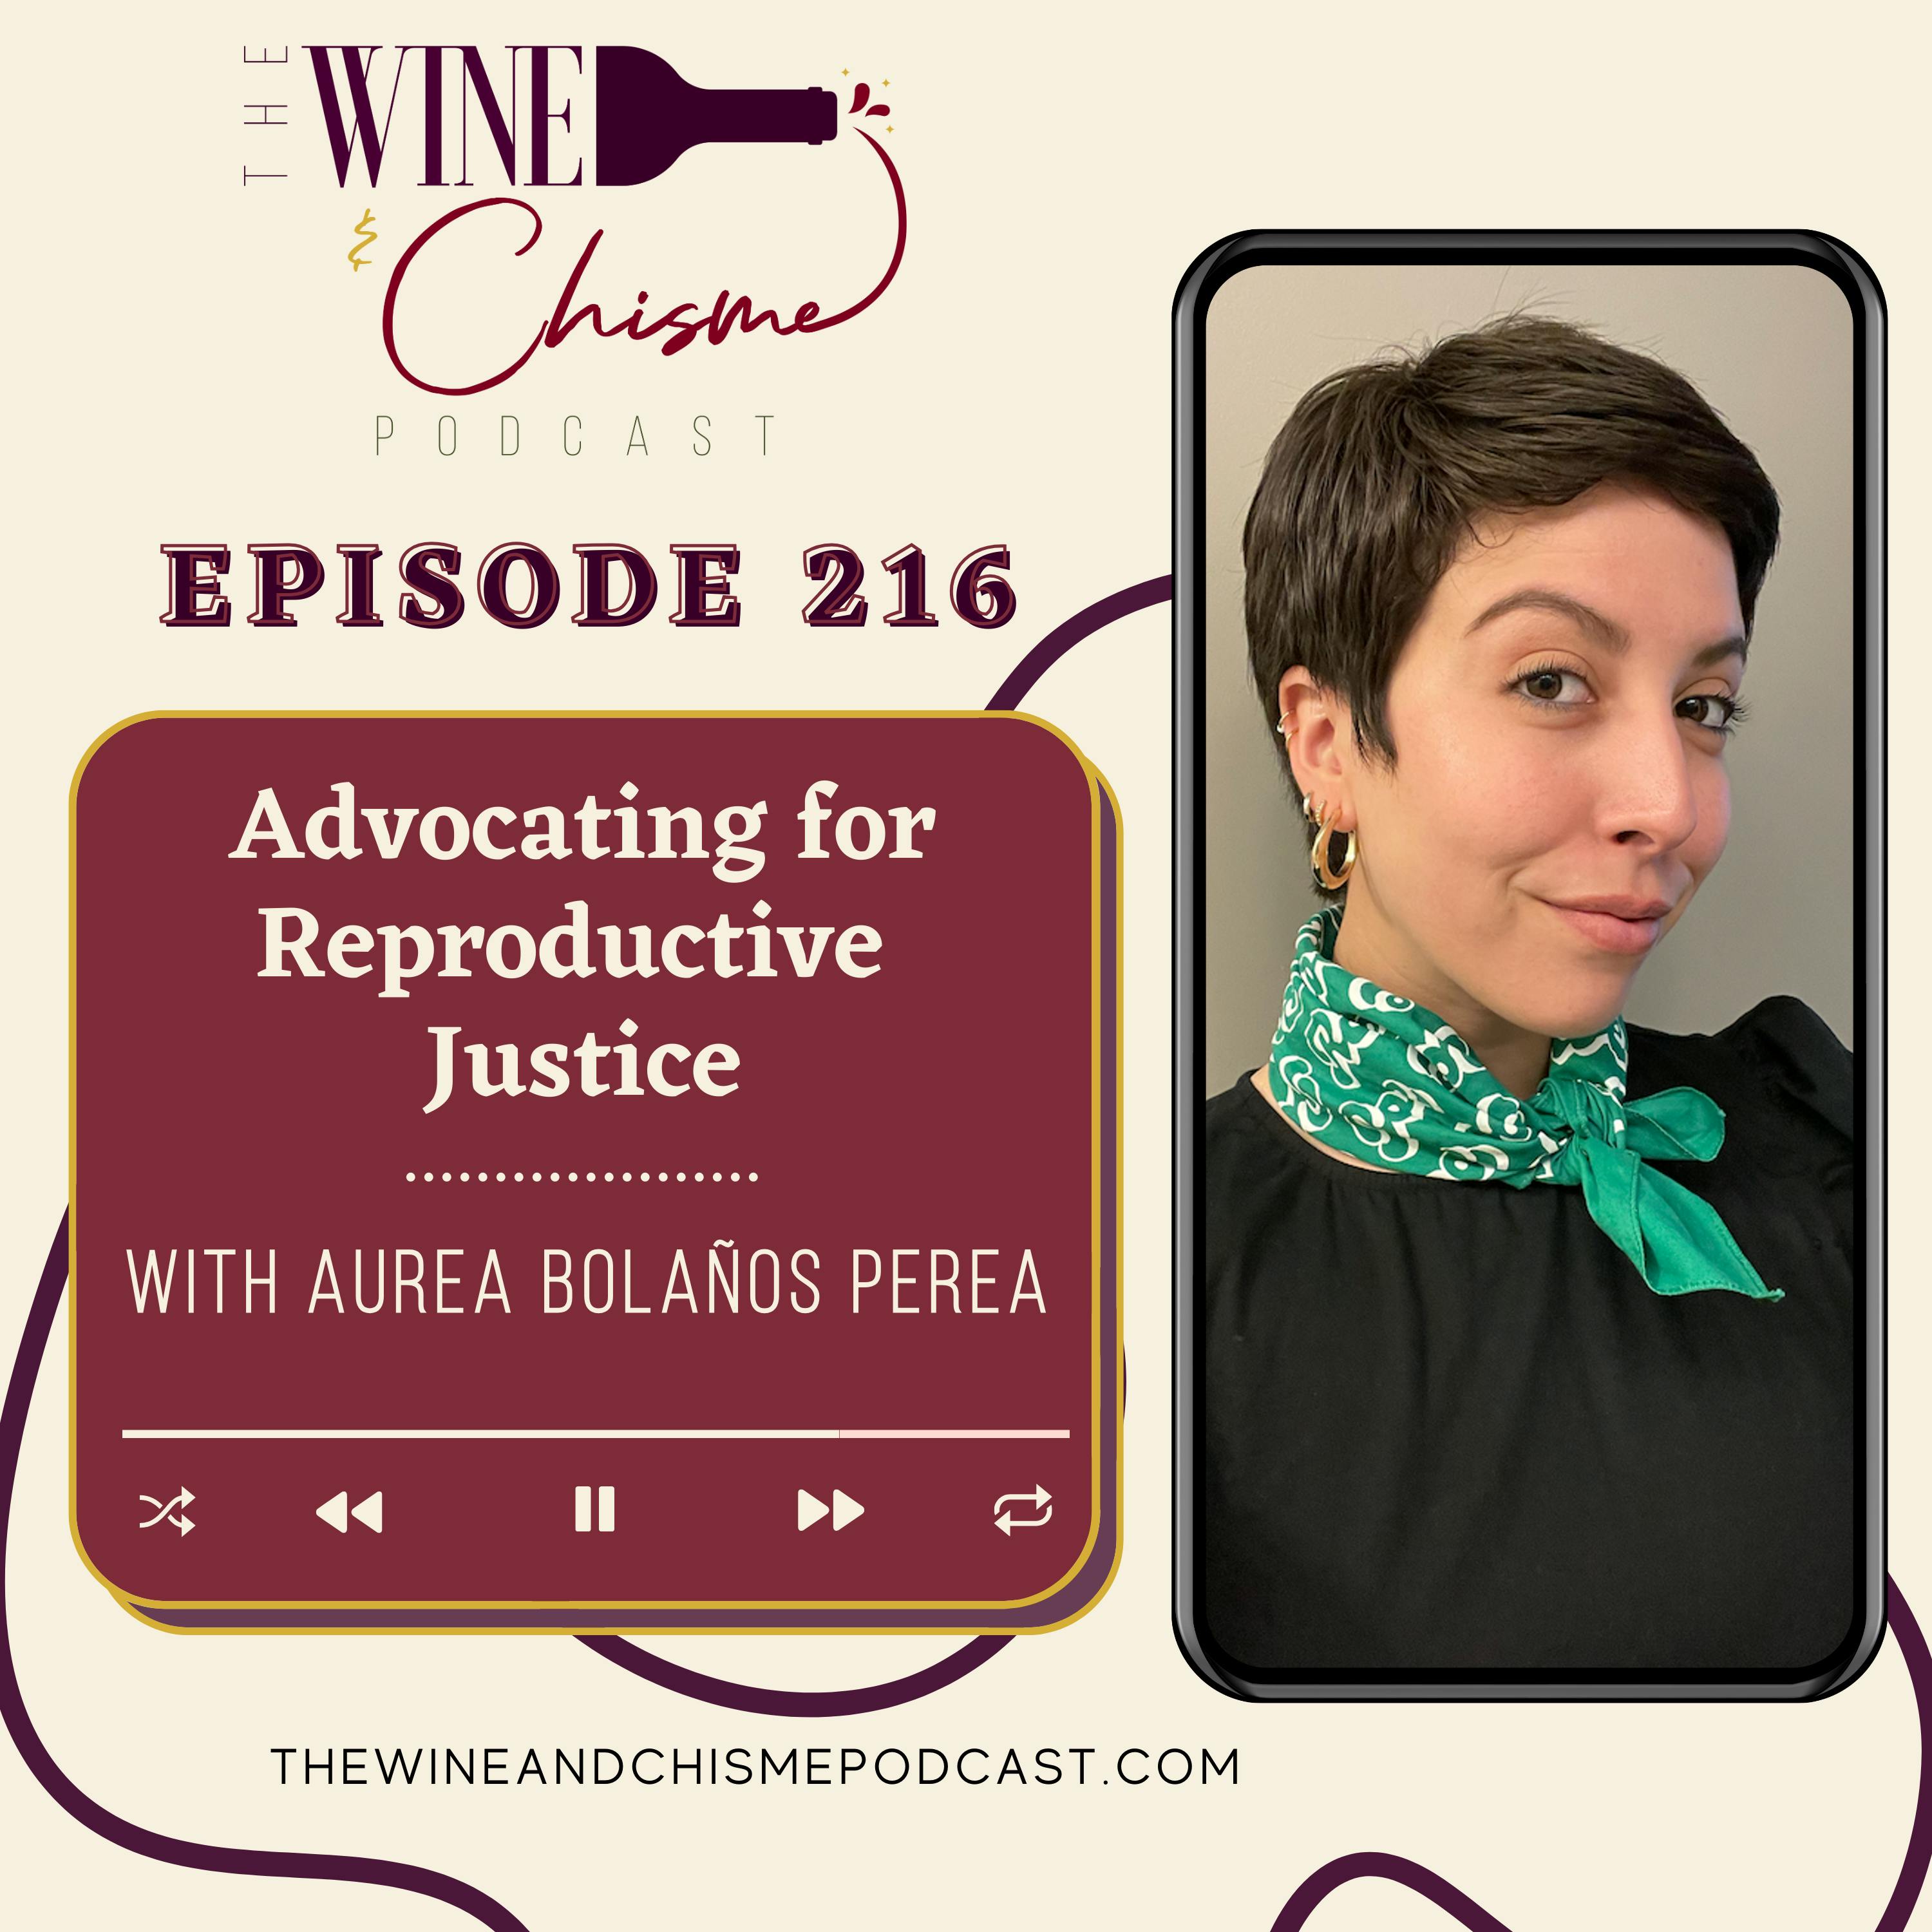 Advocating for Reproductive Justice with Aurea Bolaños Perea